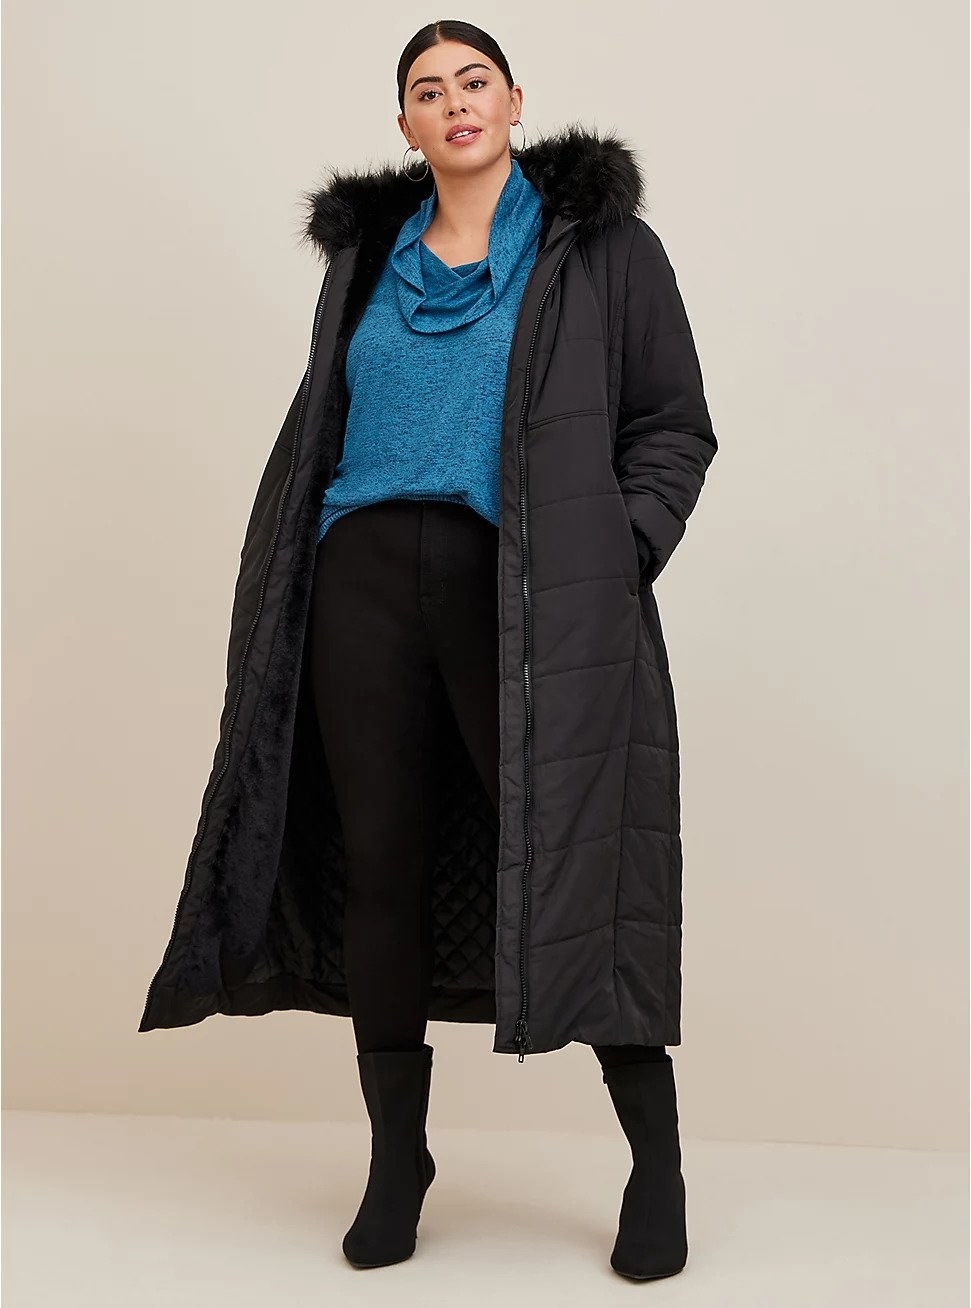 Model wearing long black puffer jacket with fur hood, wearing blue top and black pants underneath